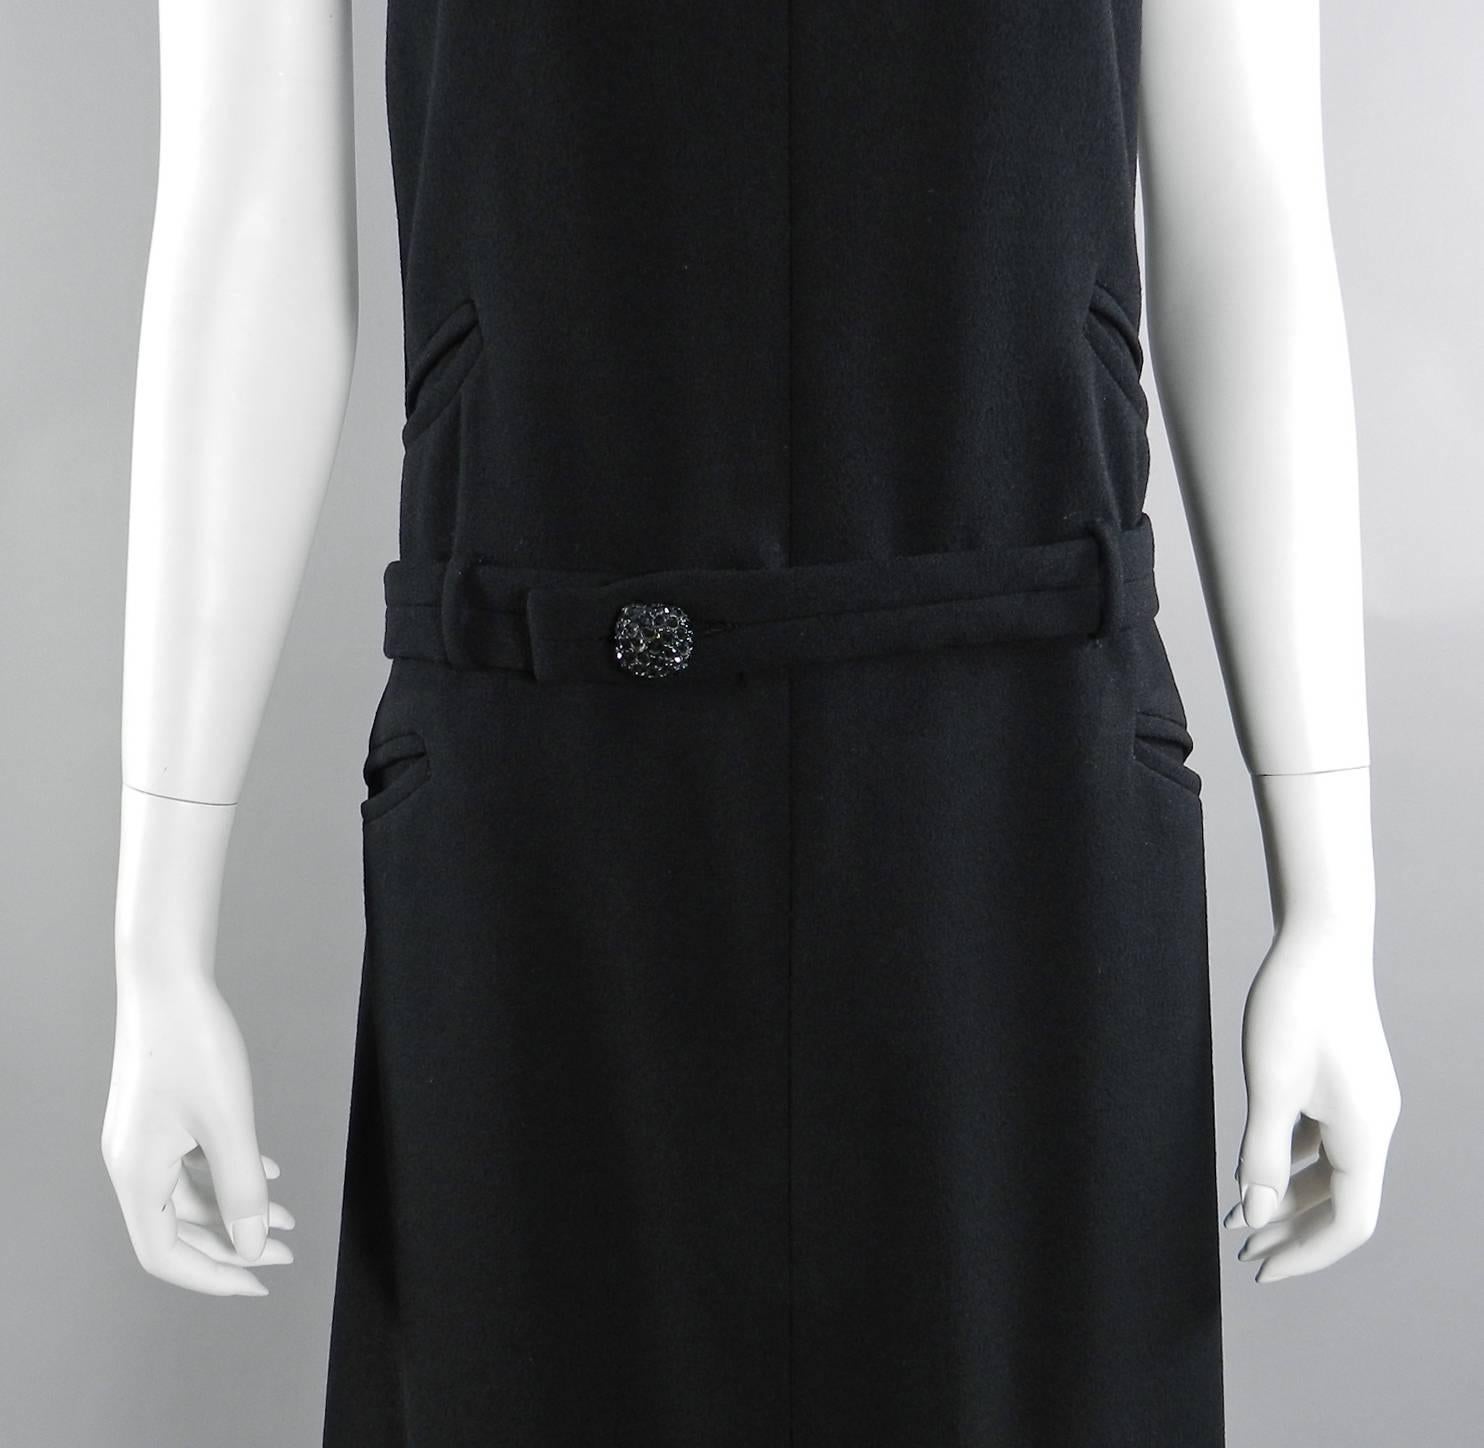 Women's Bill Blass 1960's Vintage Black Sleeveless Dress